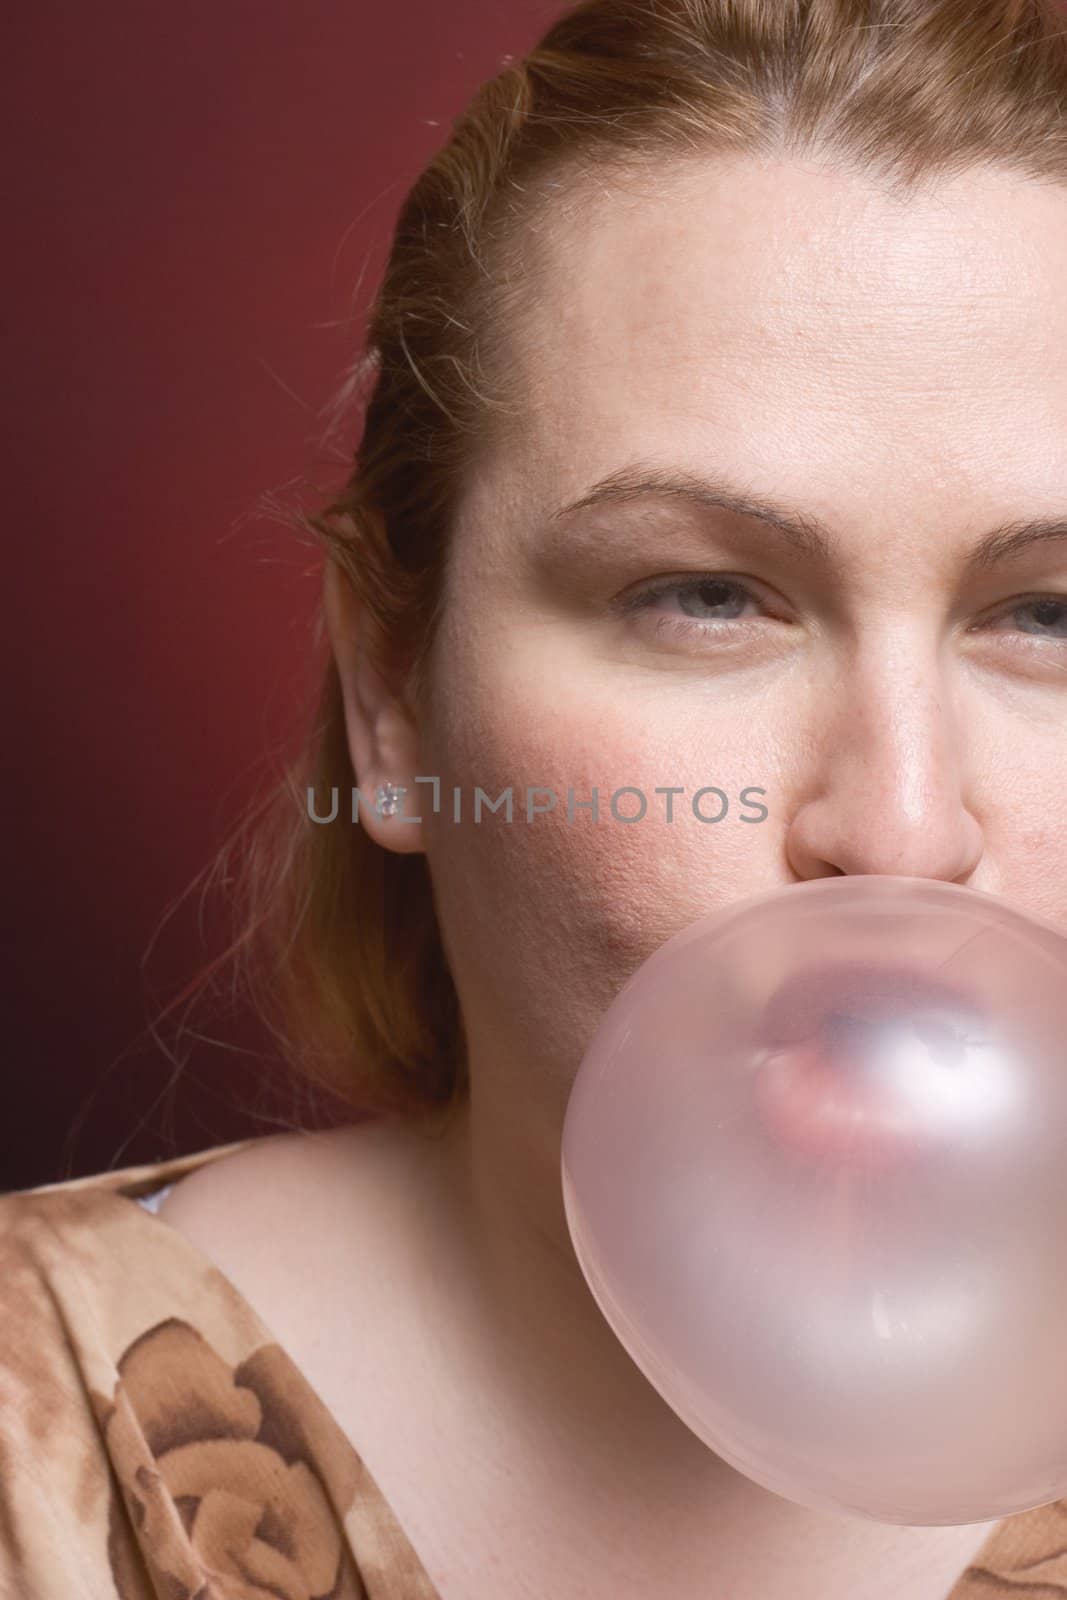 Women bubble gum by mypstudio